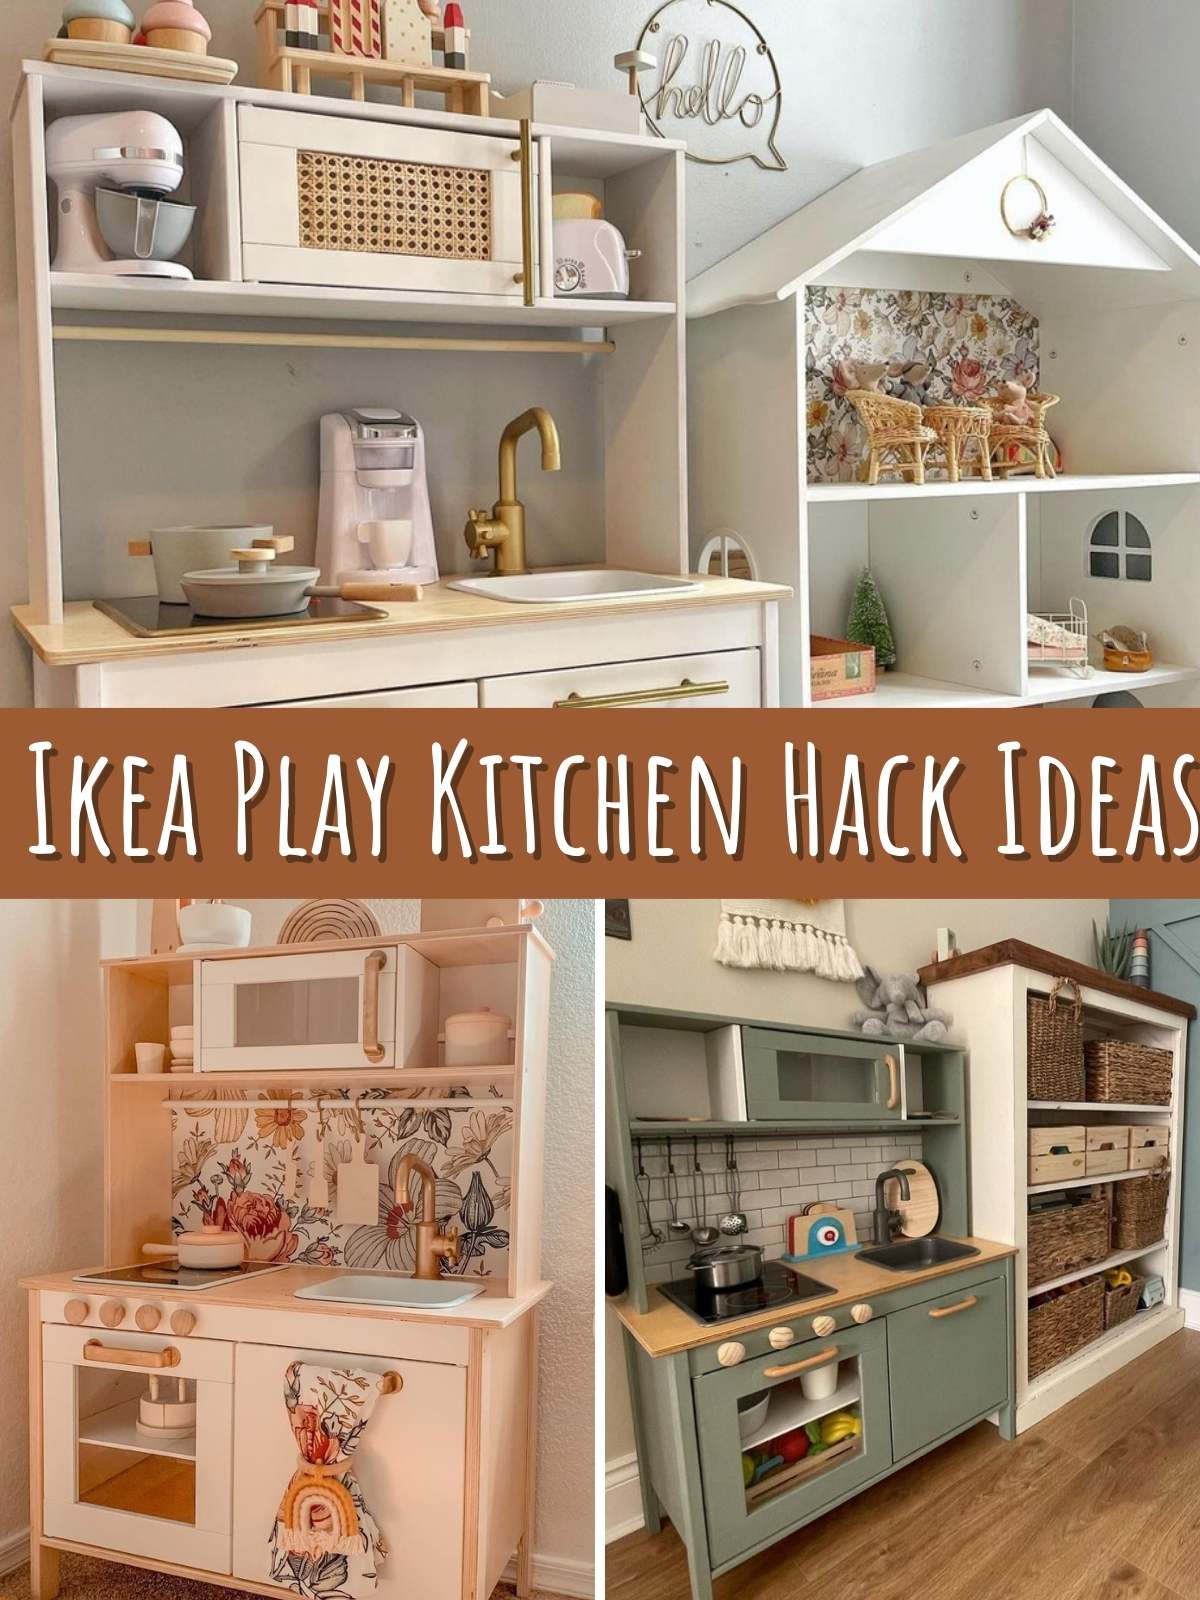 Ikea Play Kitchen Hack Ideas. Photos of 3 different Styled Kitchen